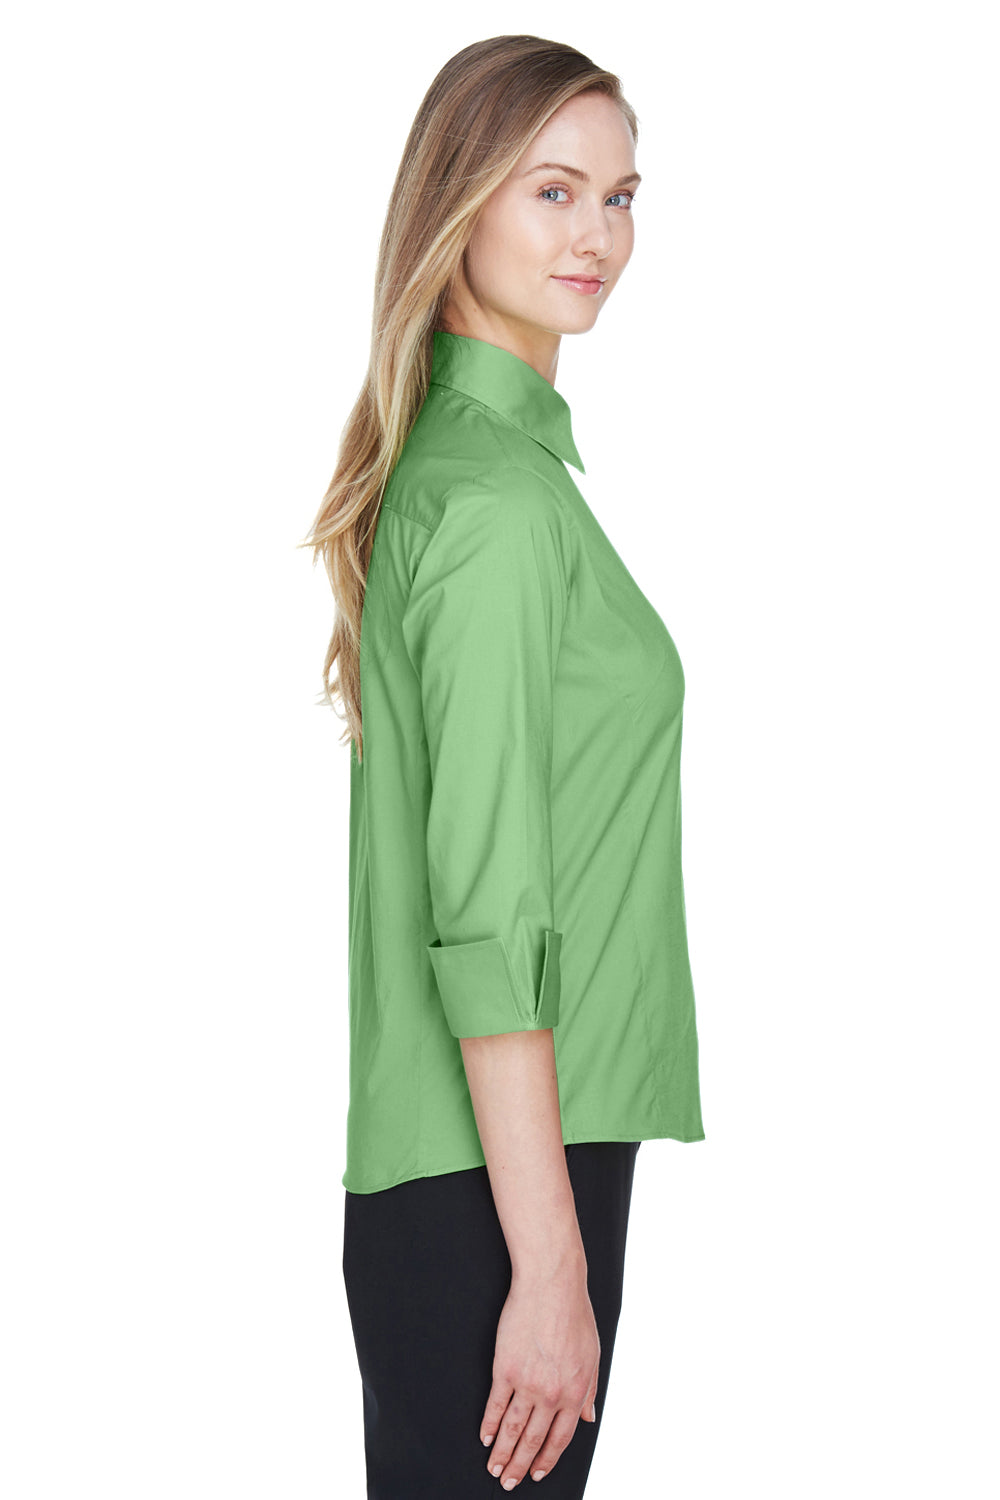 Devon & Jones DP625W Womens Perfect Fit 3/4 Sleeve Button Down Shirt Lime Green Side